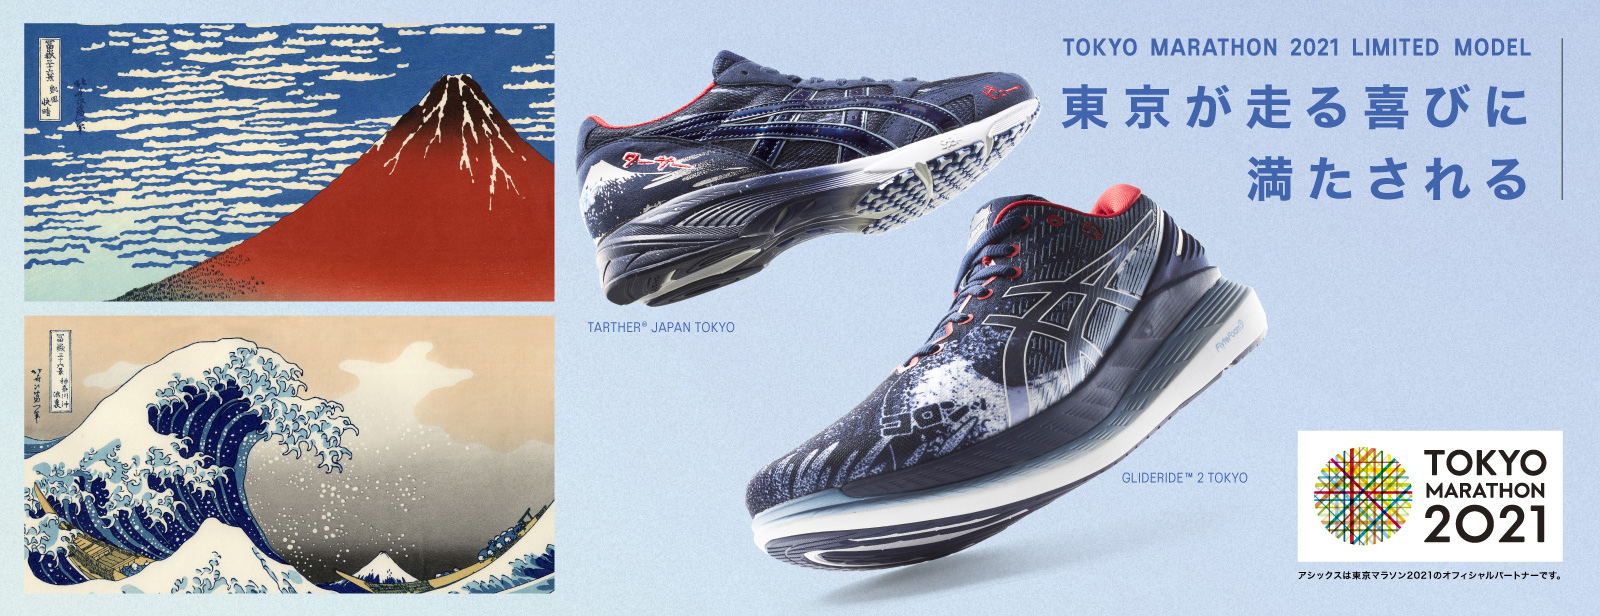 Ukiyo-e x Manga sneakers combine modern and Japan for Tokyo Marathon 2021 | SoraNews24 -Japan